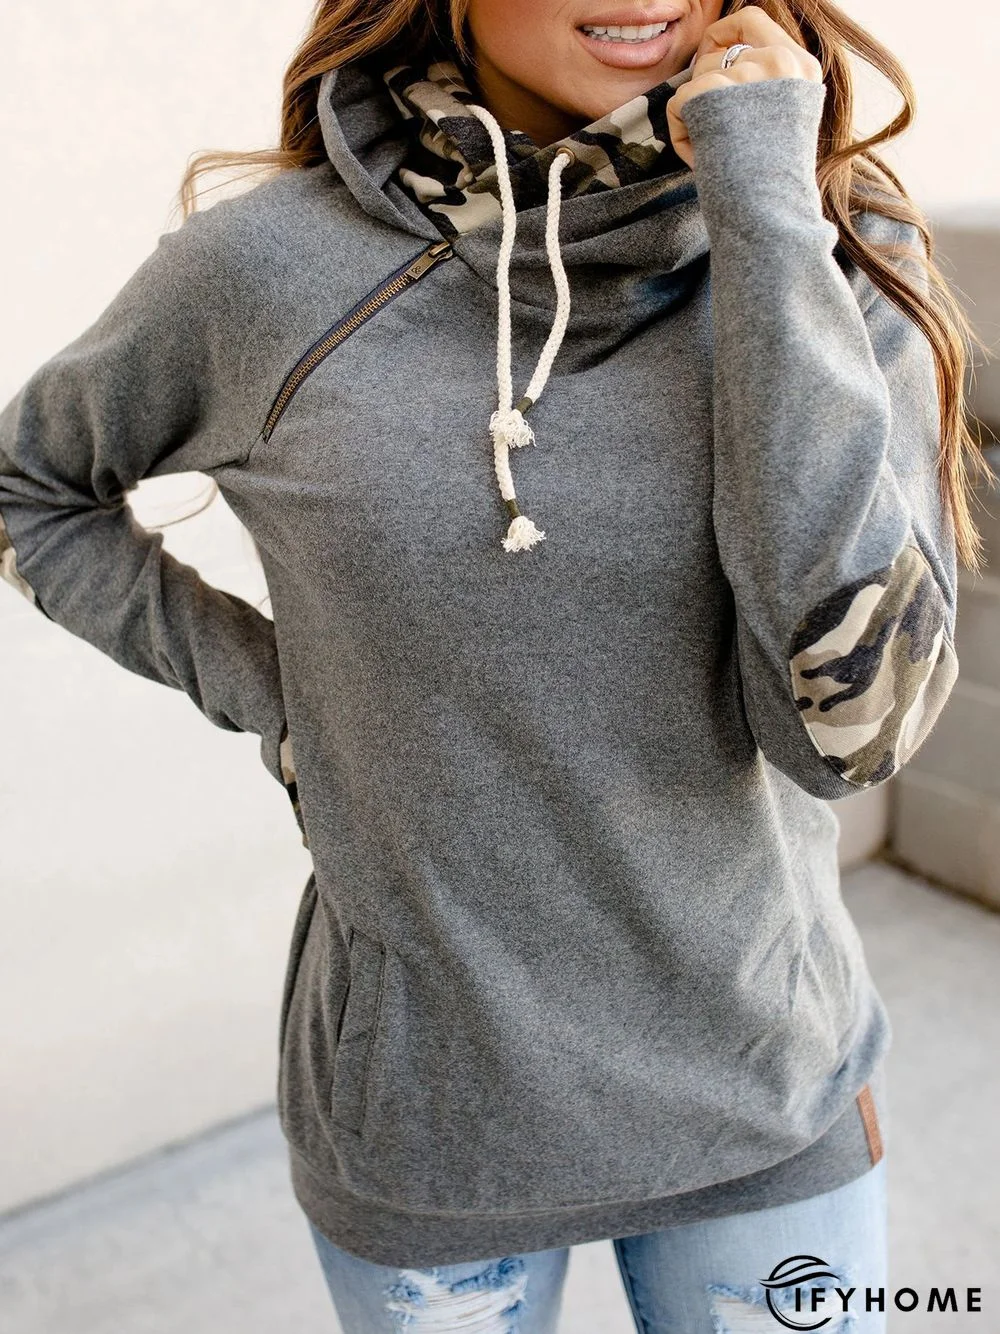 Casual All Season Camo Cotton Pockets Mid-weight Long sleeve Hooded Regular Sweatshirt for Women | IFYHOME